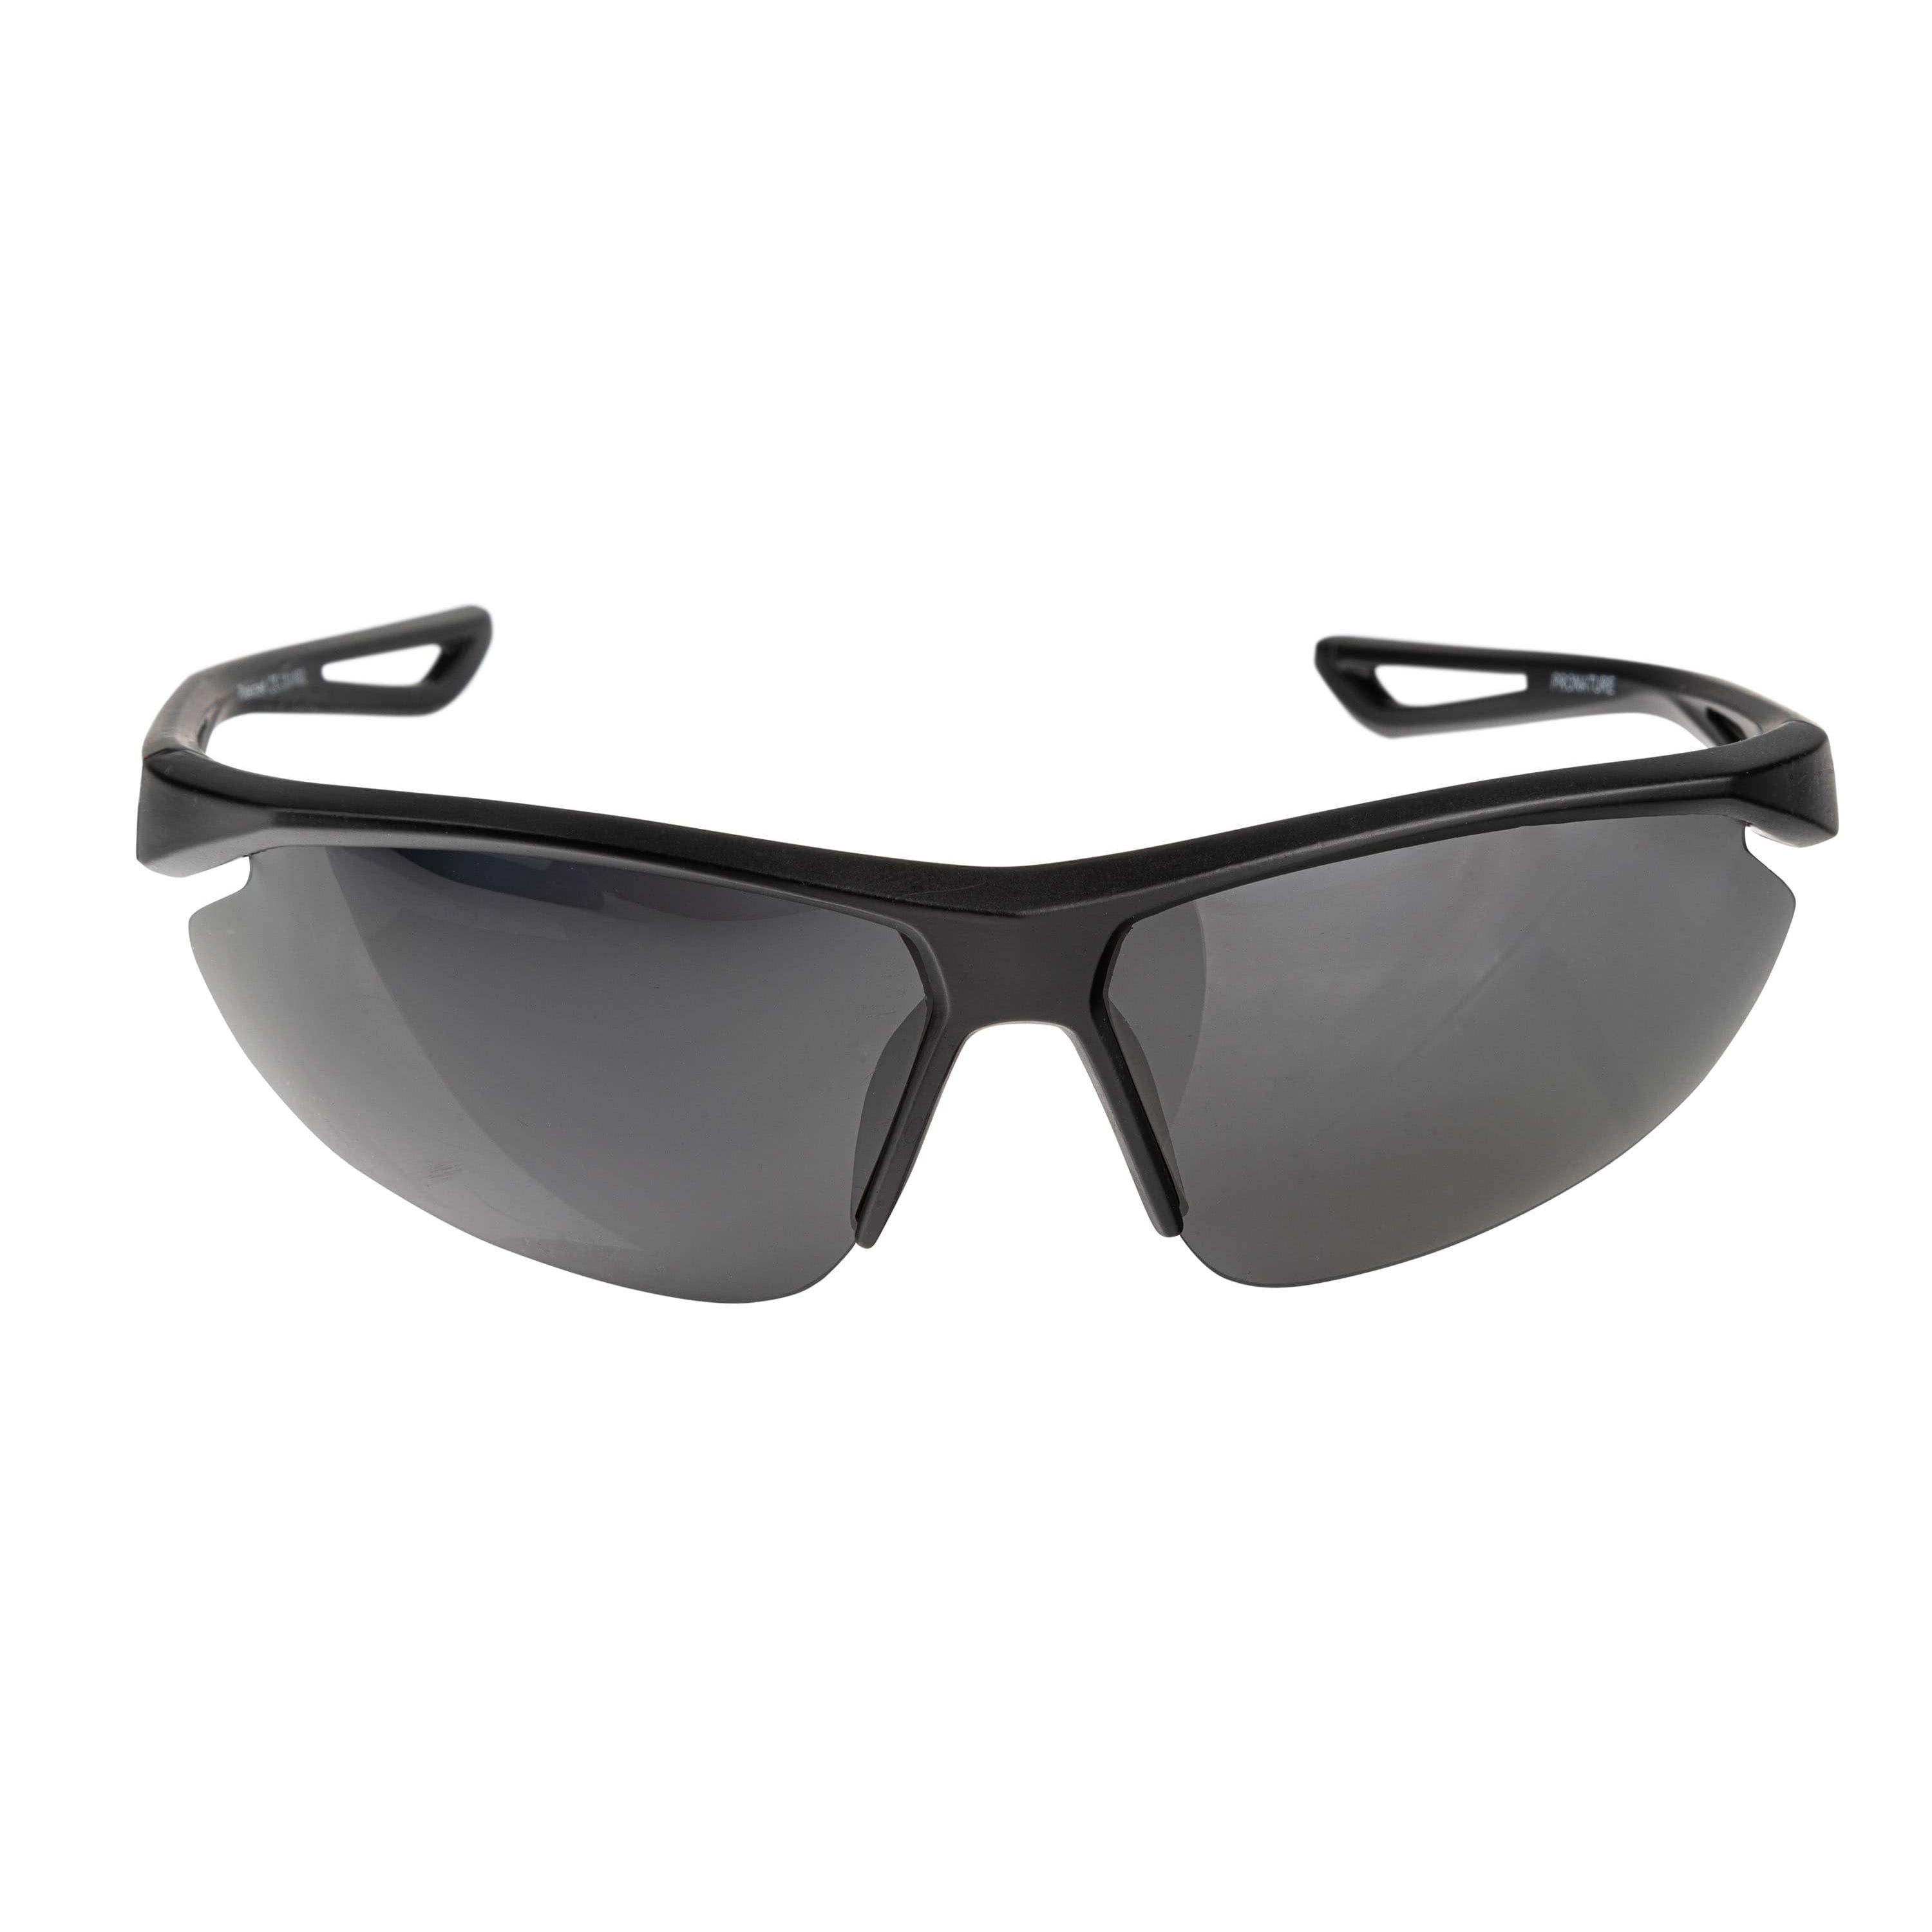 Smoked lens polarized sunglasses - Adult